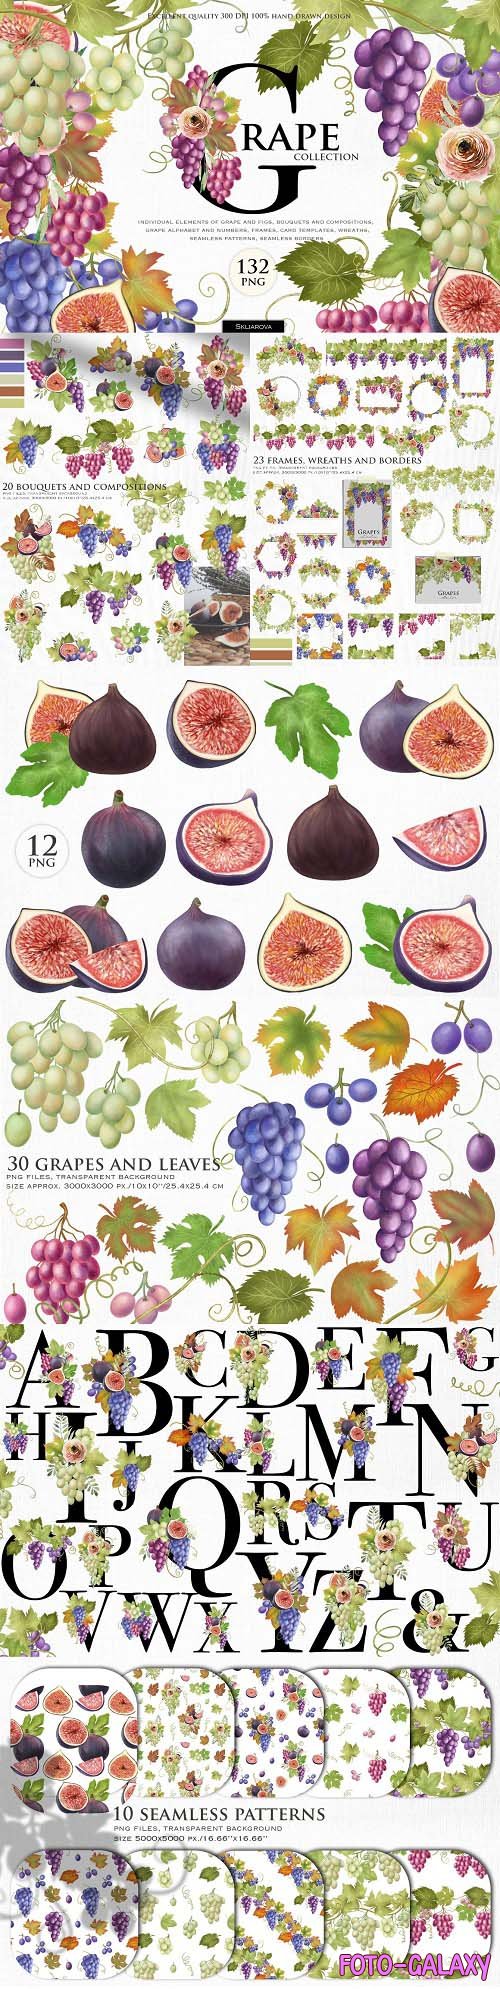 Grape collection - 6260638